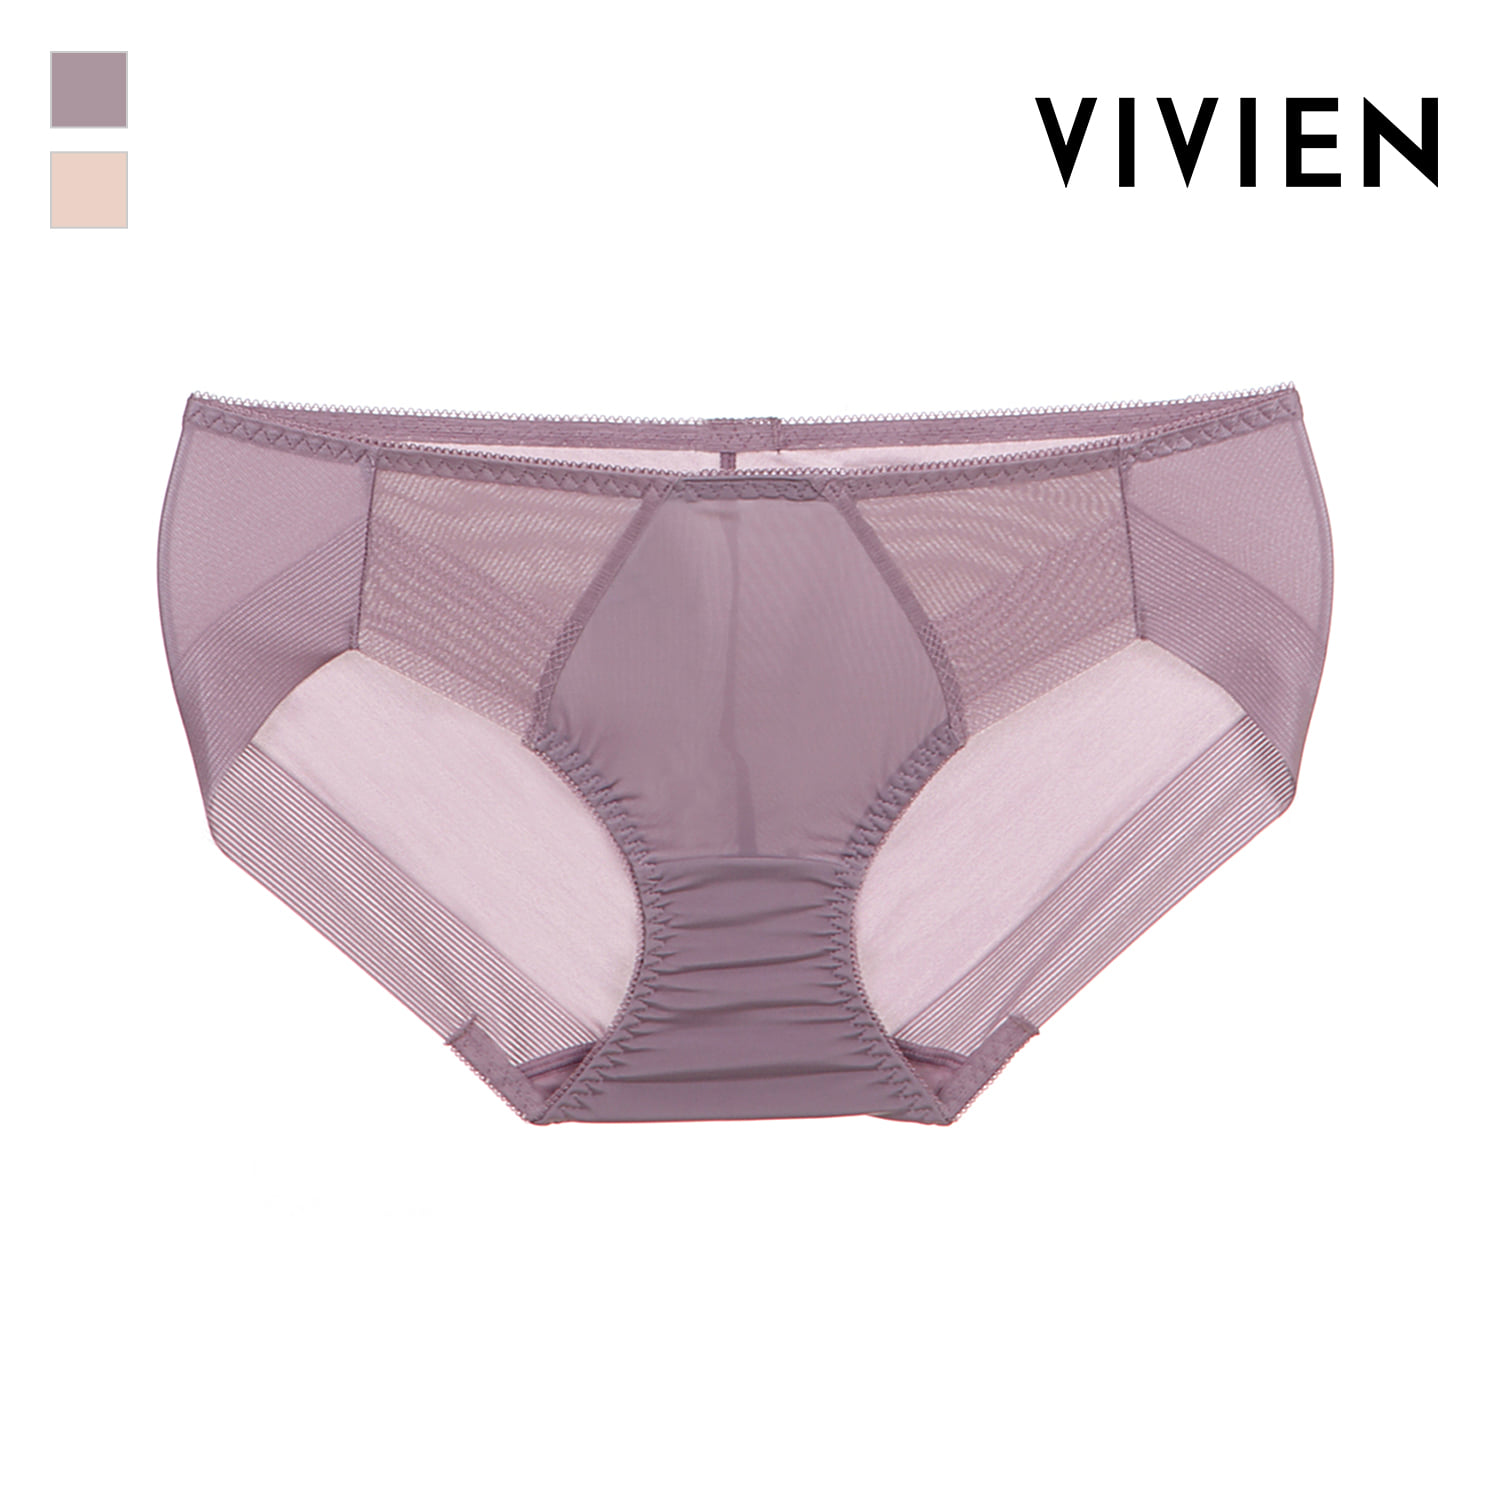 VIVIEN 여자속옷 BR506N세트 헴팬티 BP506P